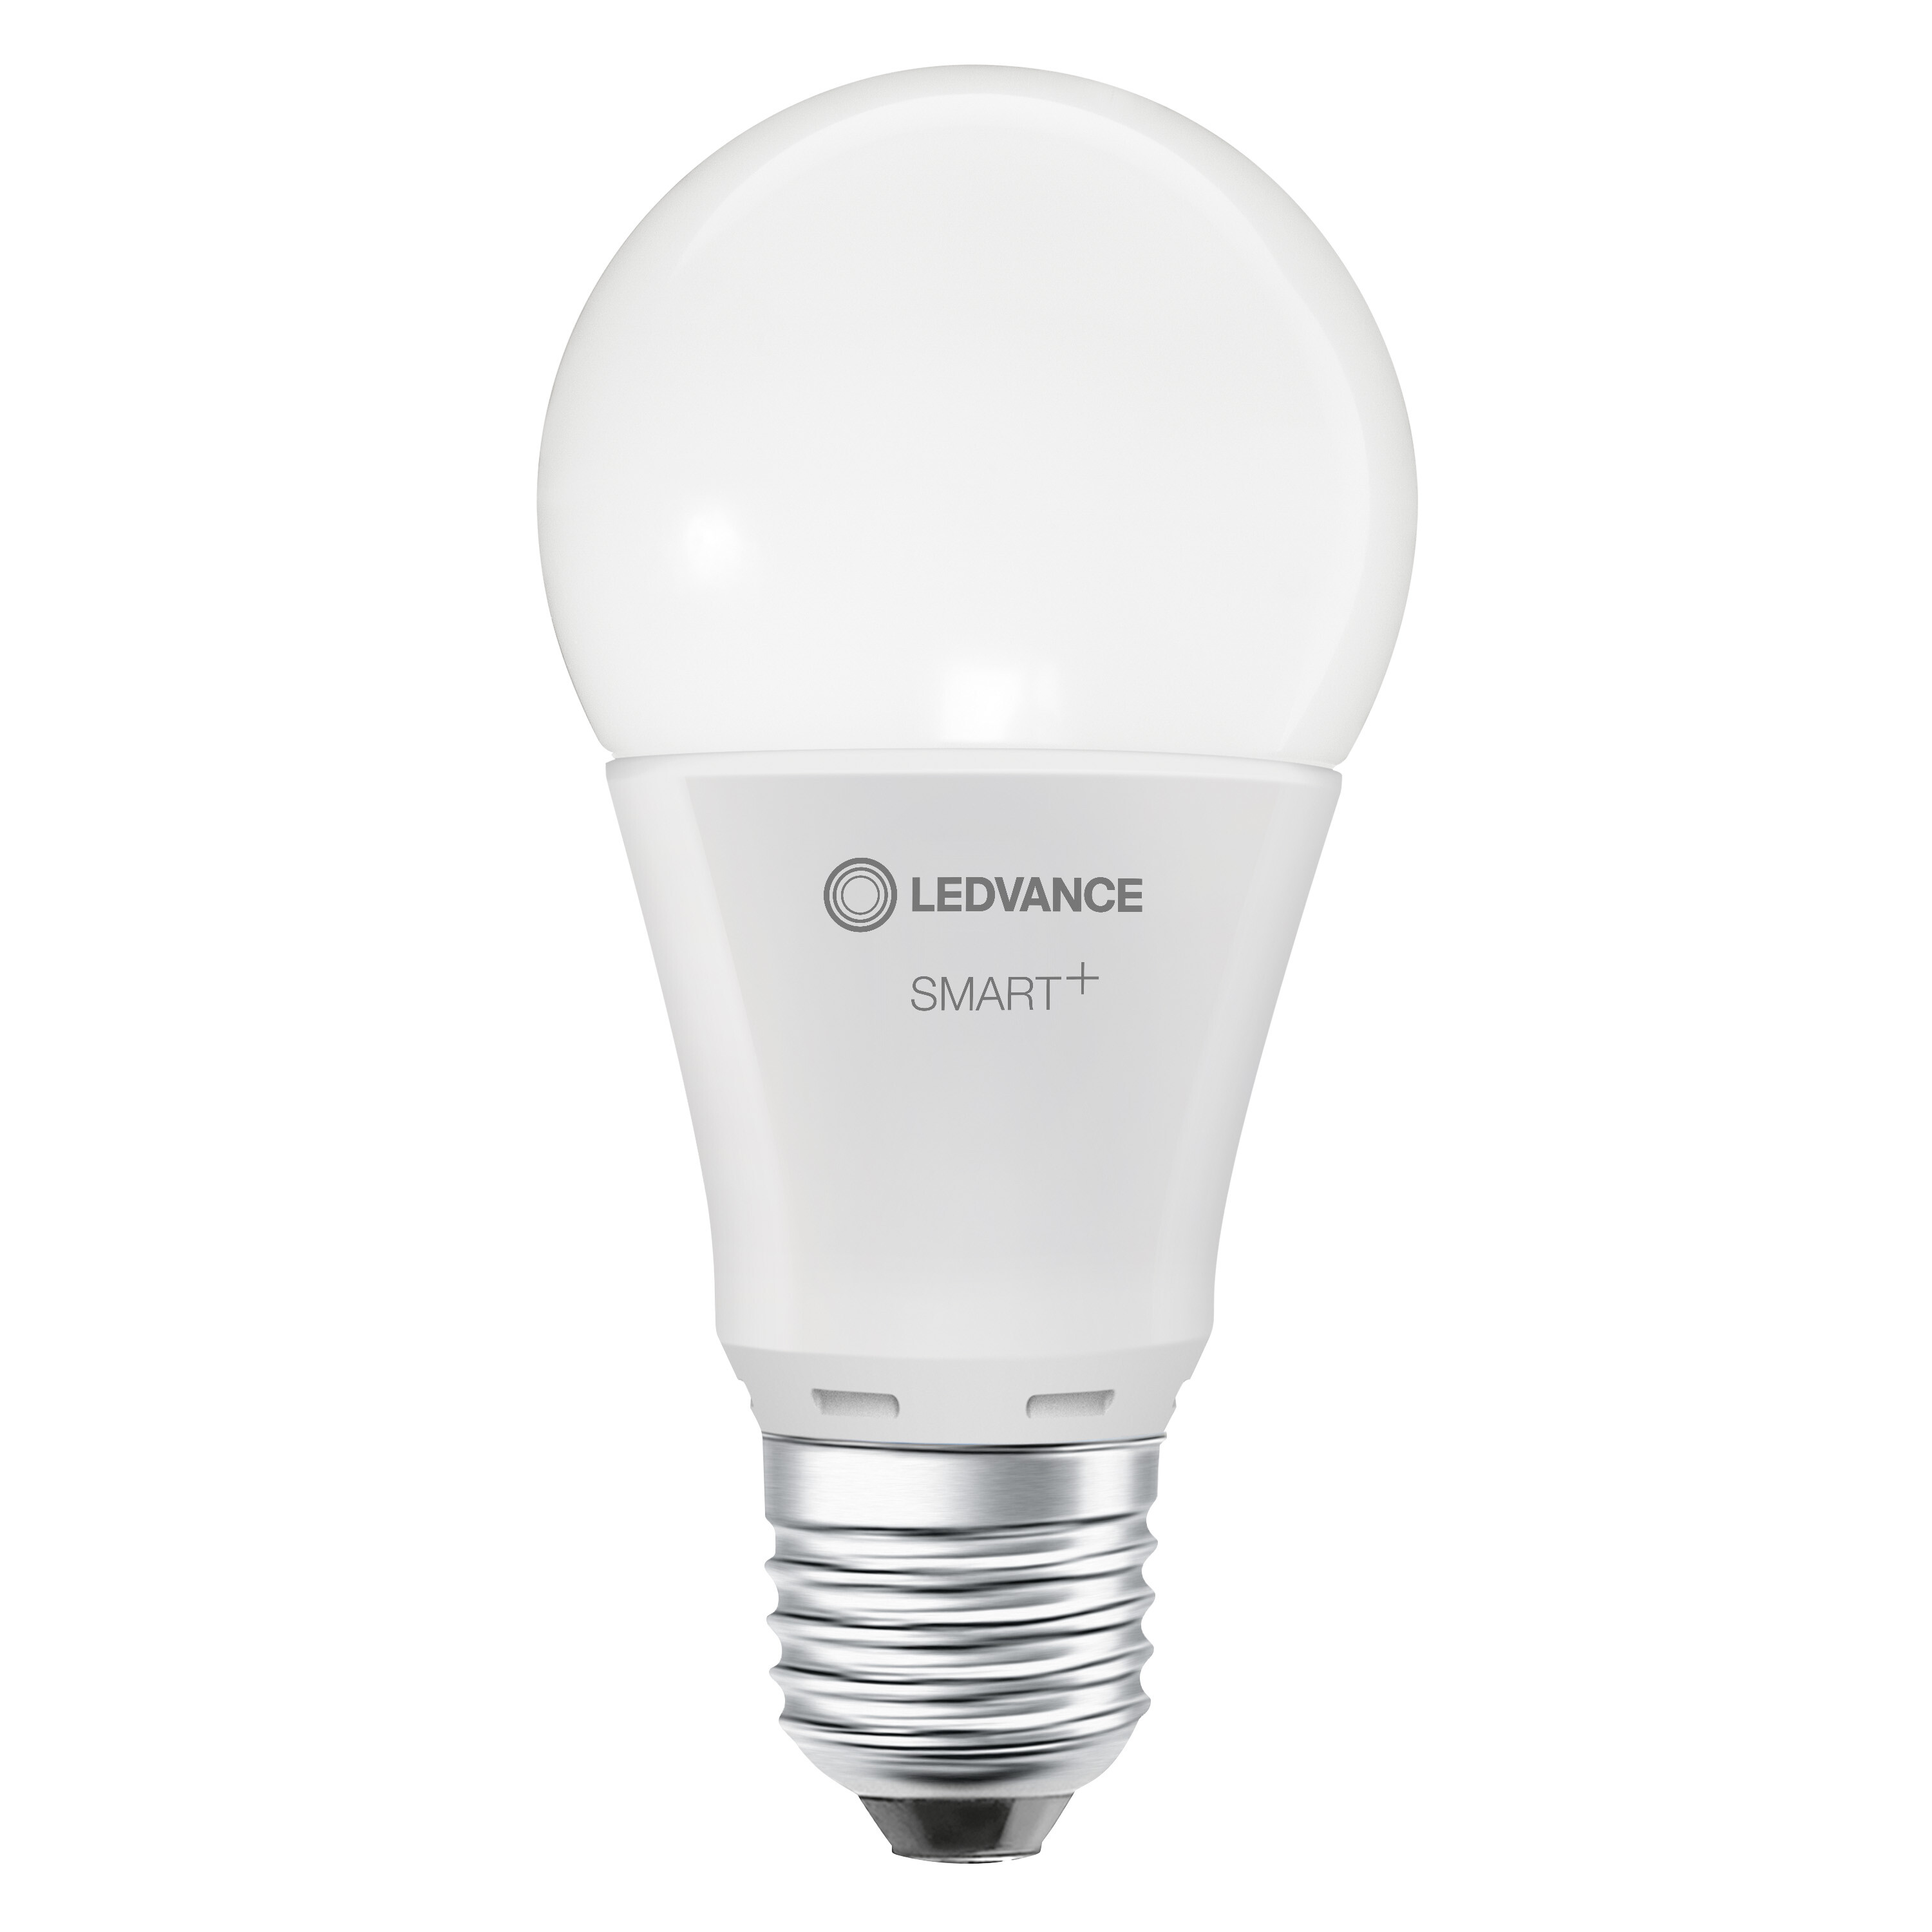 Dimmable Smarte LED Warmweiß Lampe LEDVANCE Classic SMART+